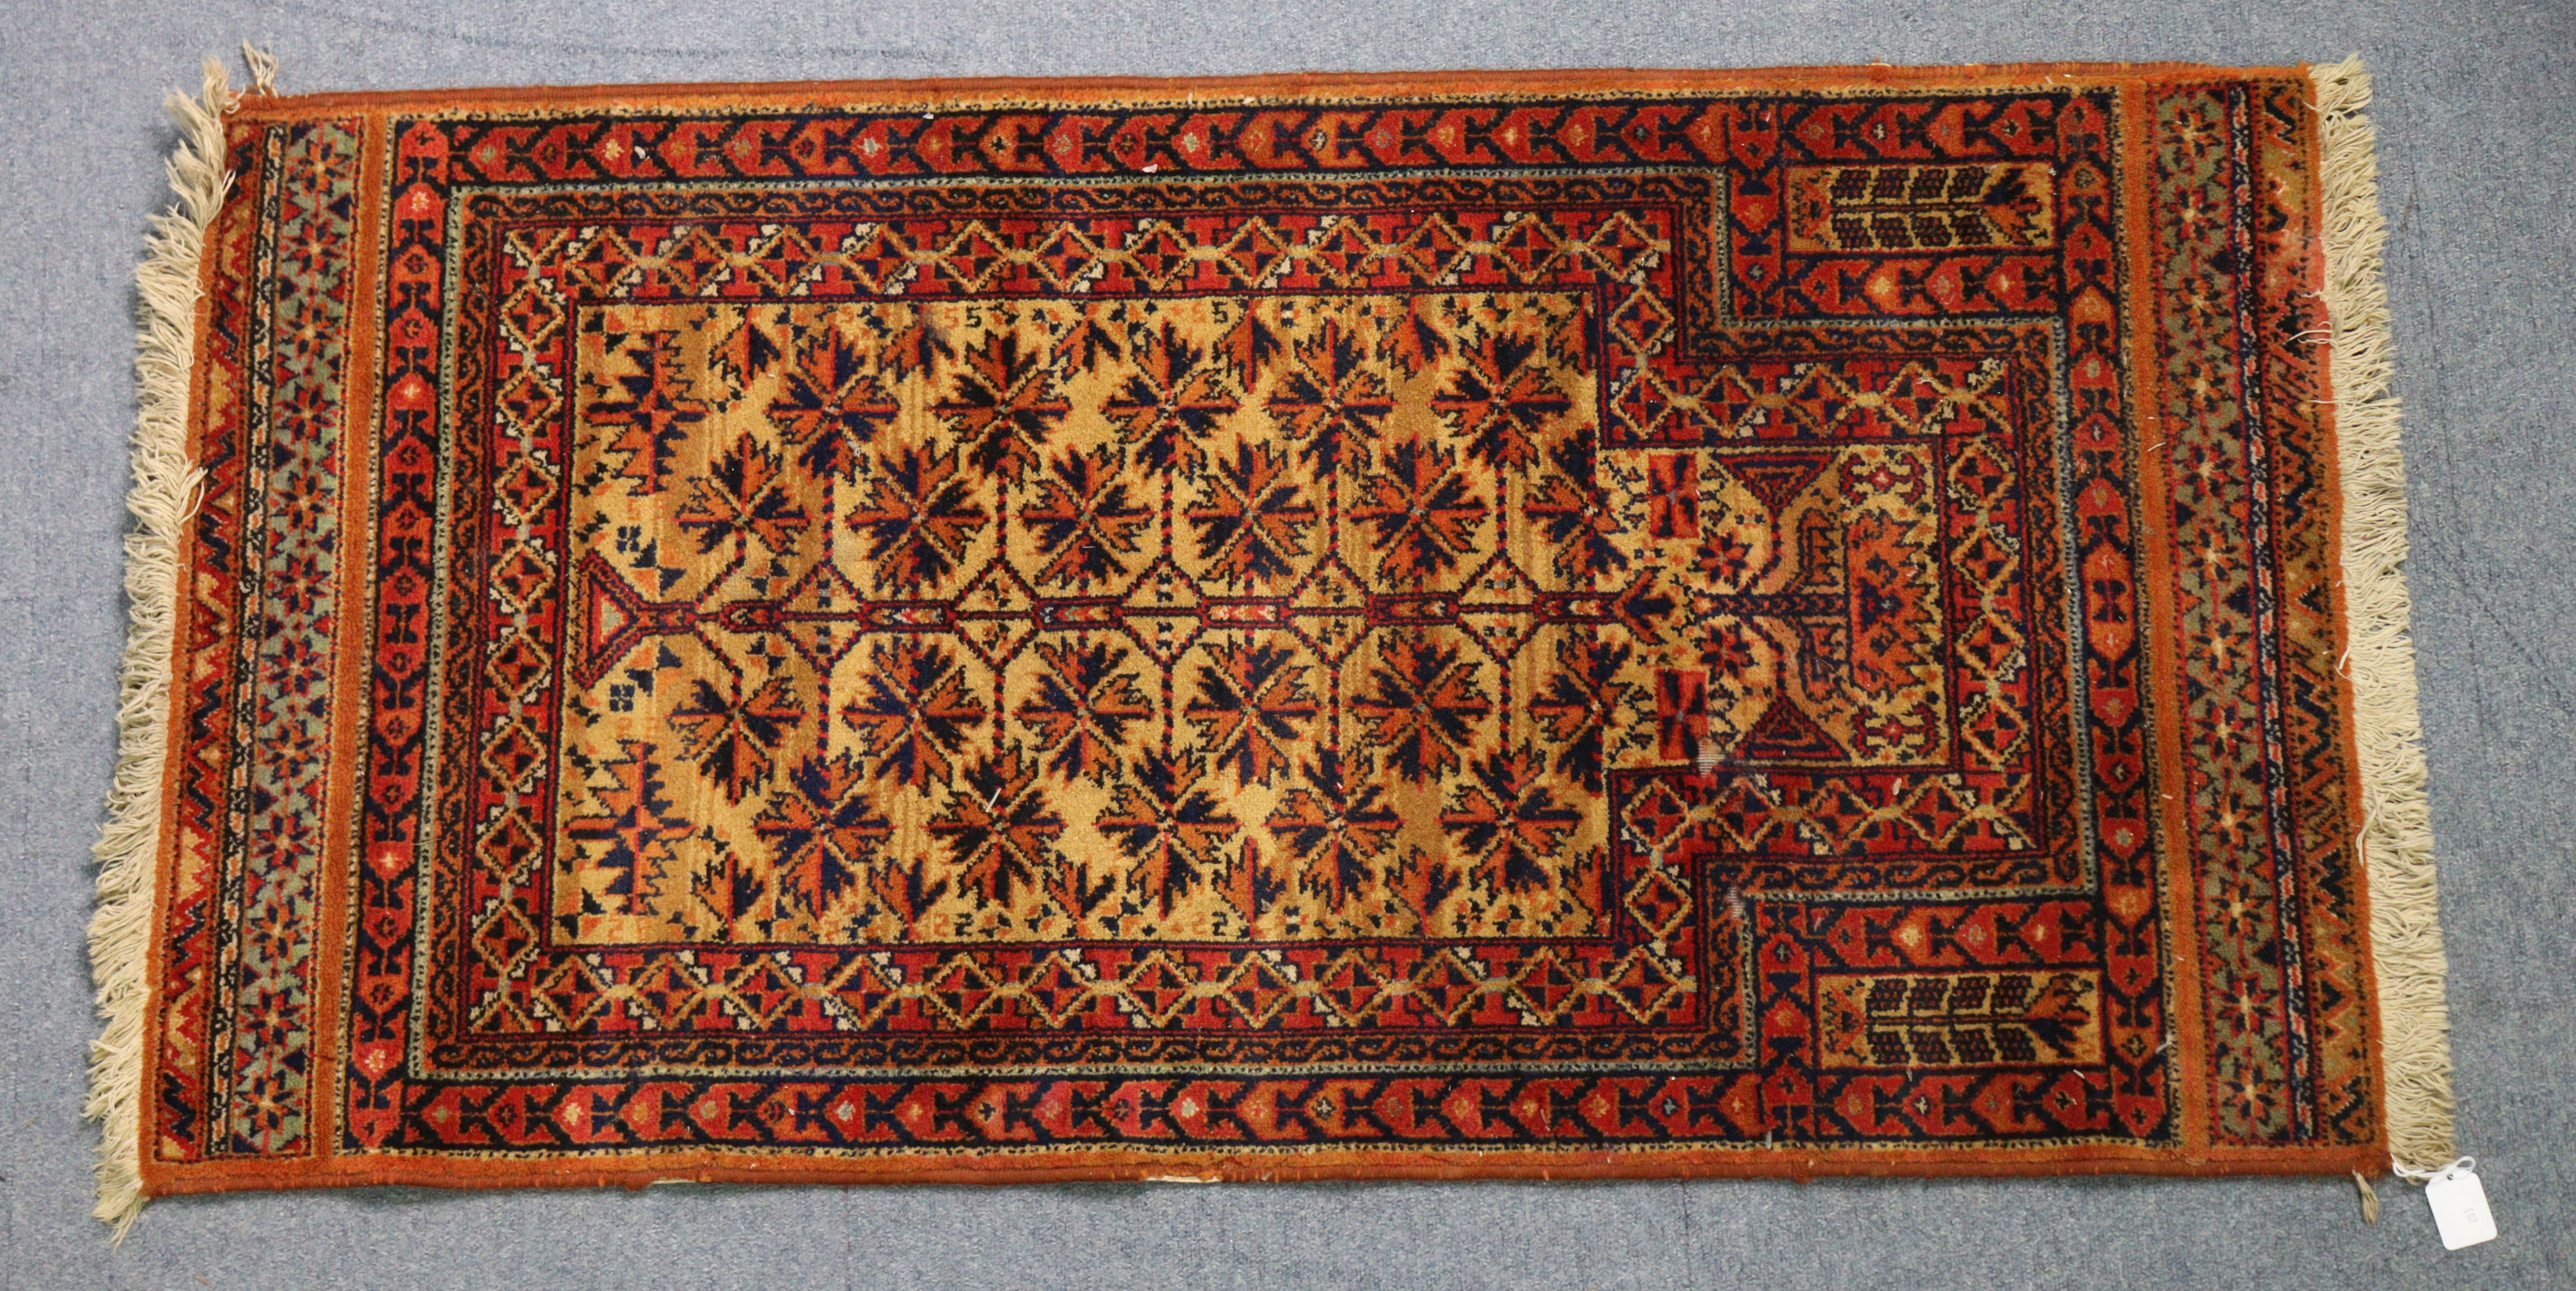 Twelve various rugs (various sizes, some worn).